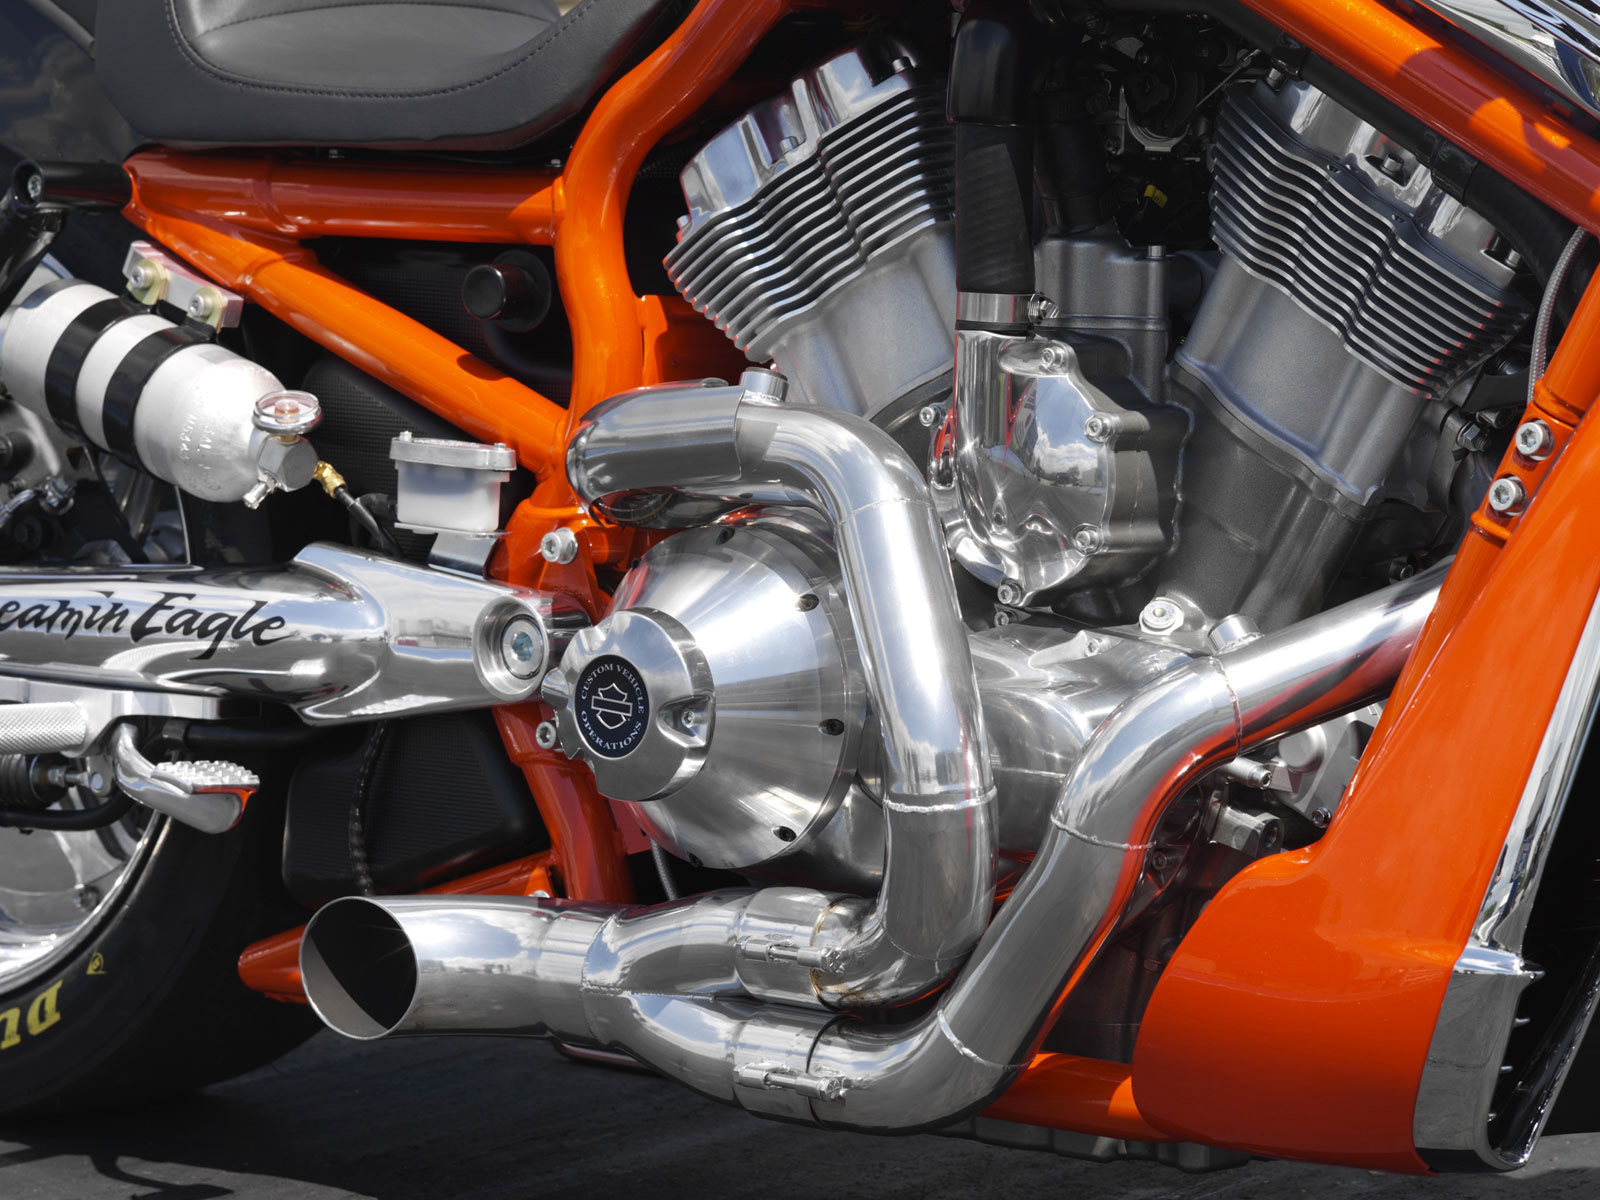 Harley Davidson engine power